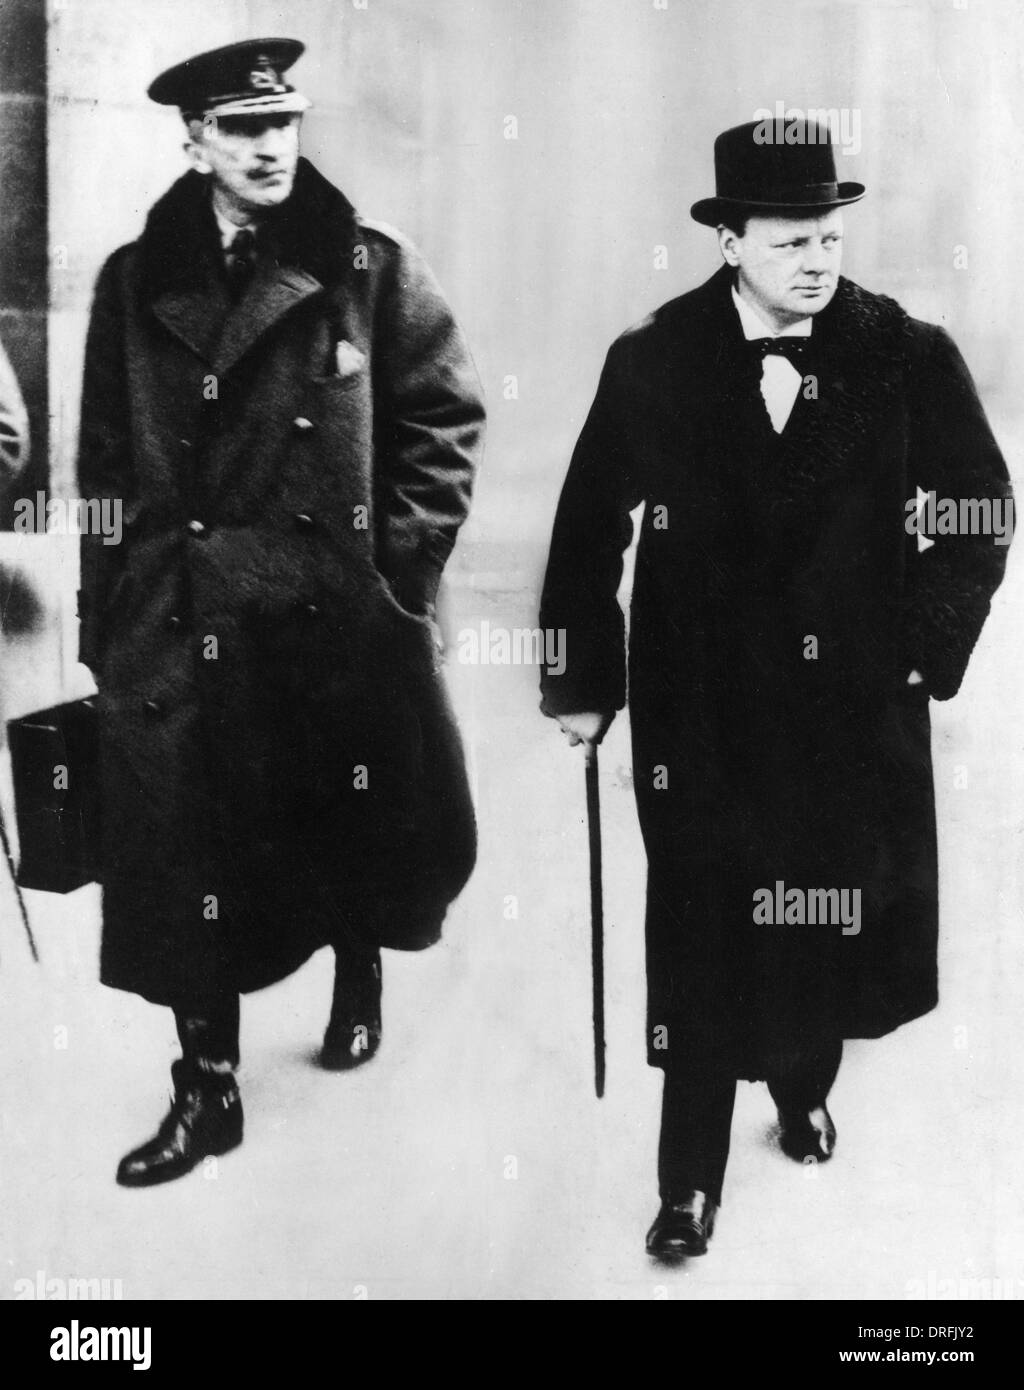 Winston Churchill walking along the street Stock Photo